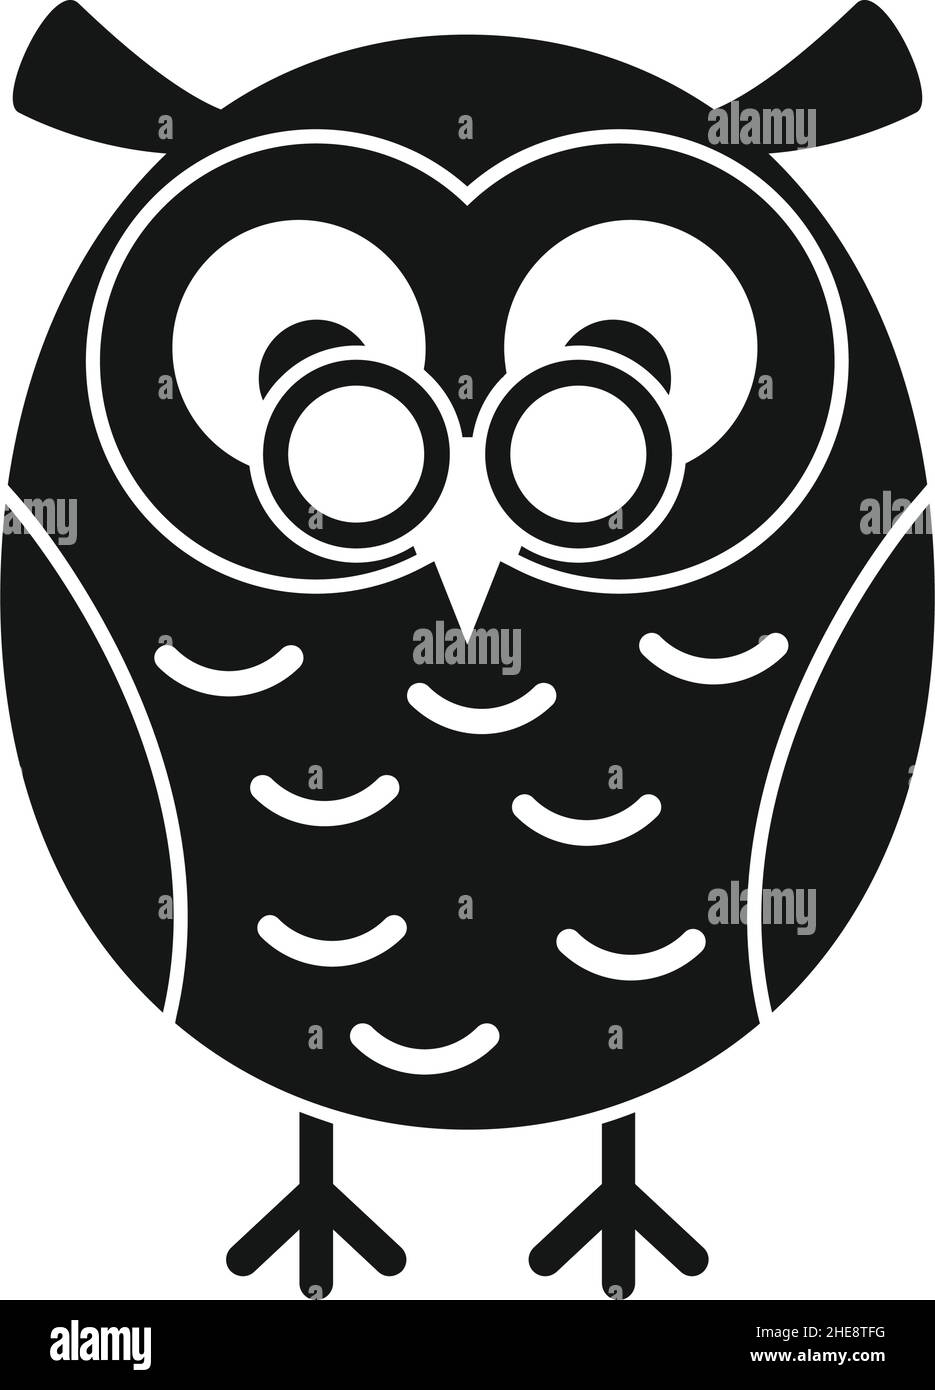 Mascot owl black simple silhouette vector icon Stock Vector Image & Art ...